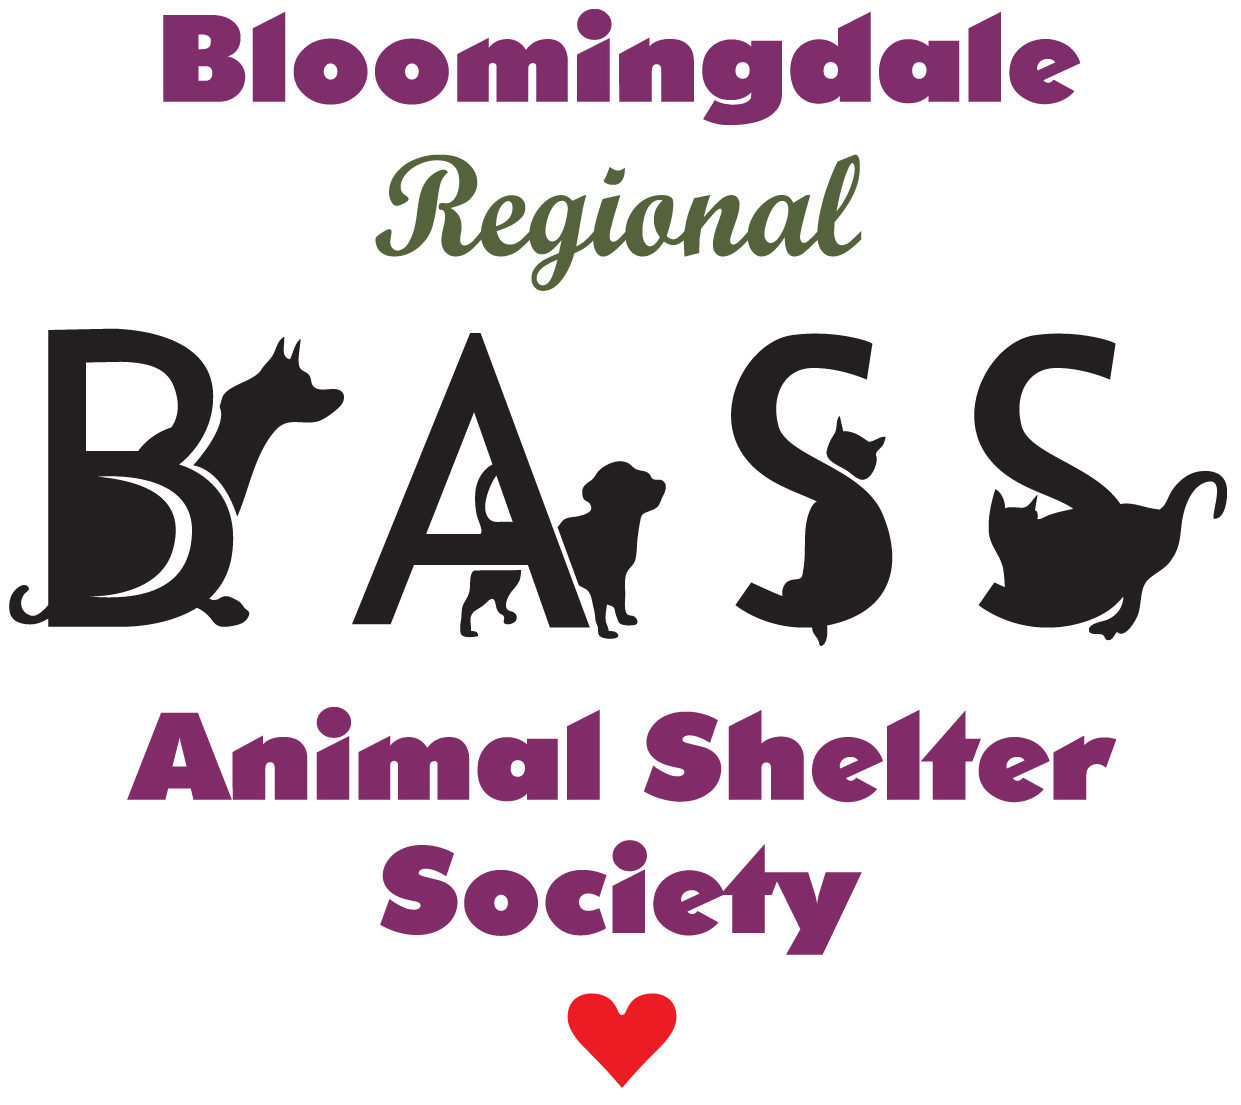 Bloomingdale Regional Animal Shelter Society (bass)